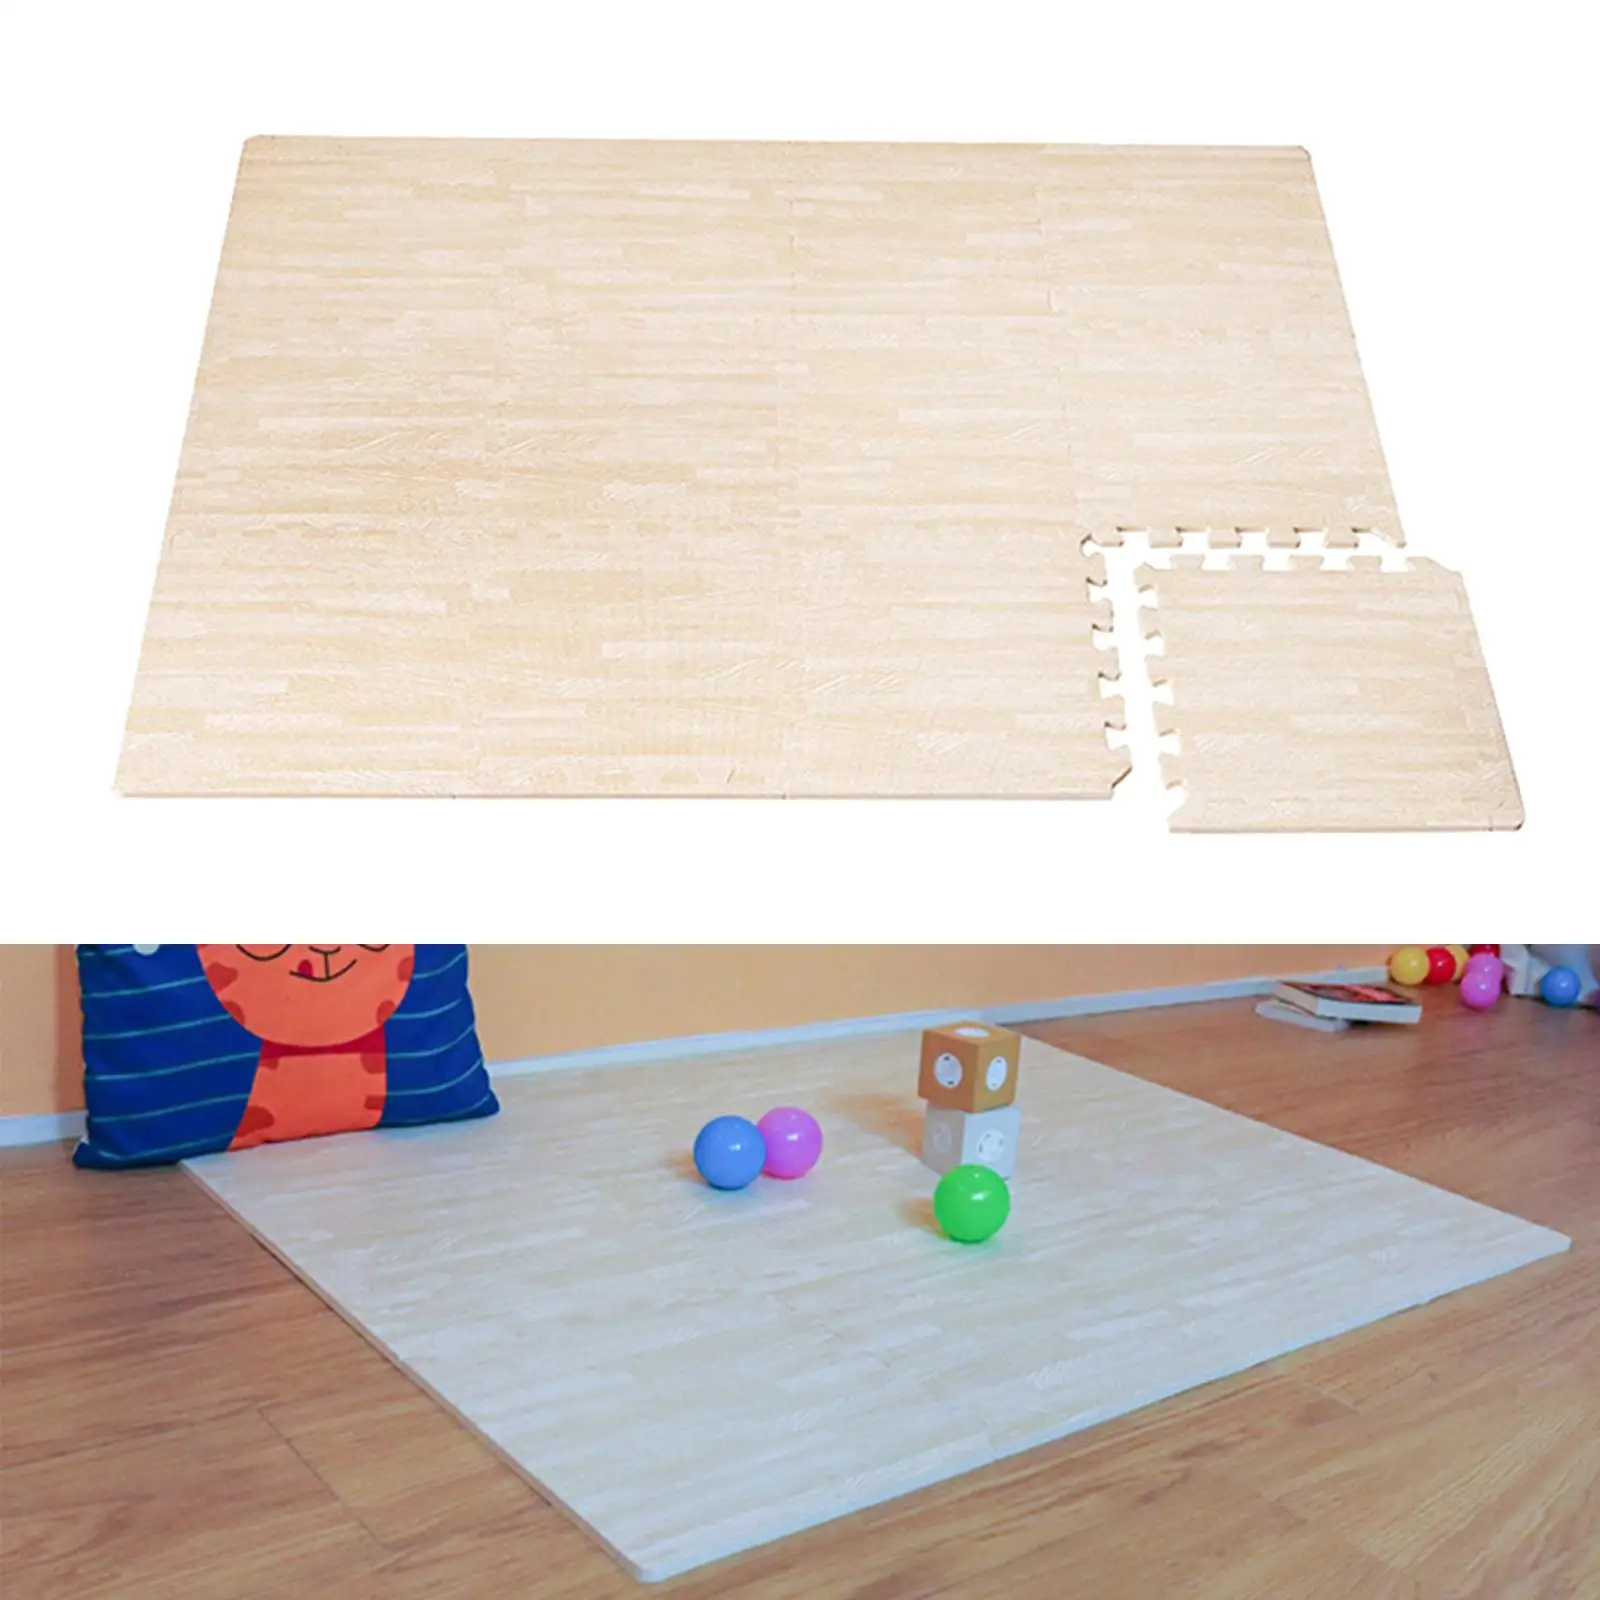 12 Pcs Interlocking Puzzle Mat Waterproof Flooring Padding Tiles Play Mat Baby Crawling Pad 12x12inch, Wood Grain